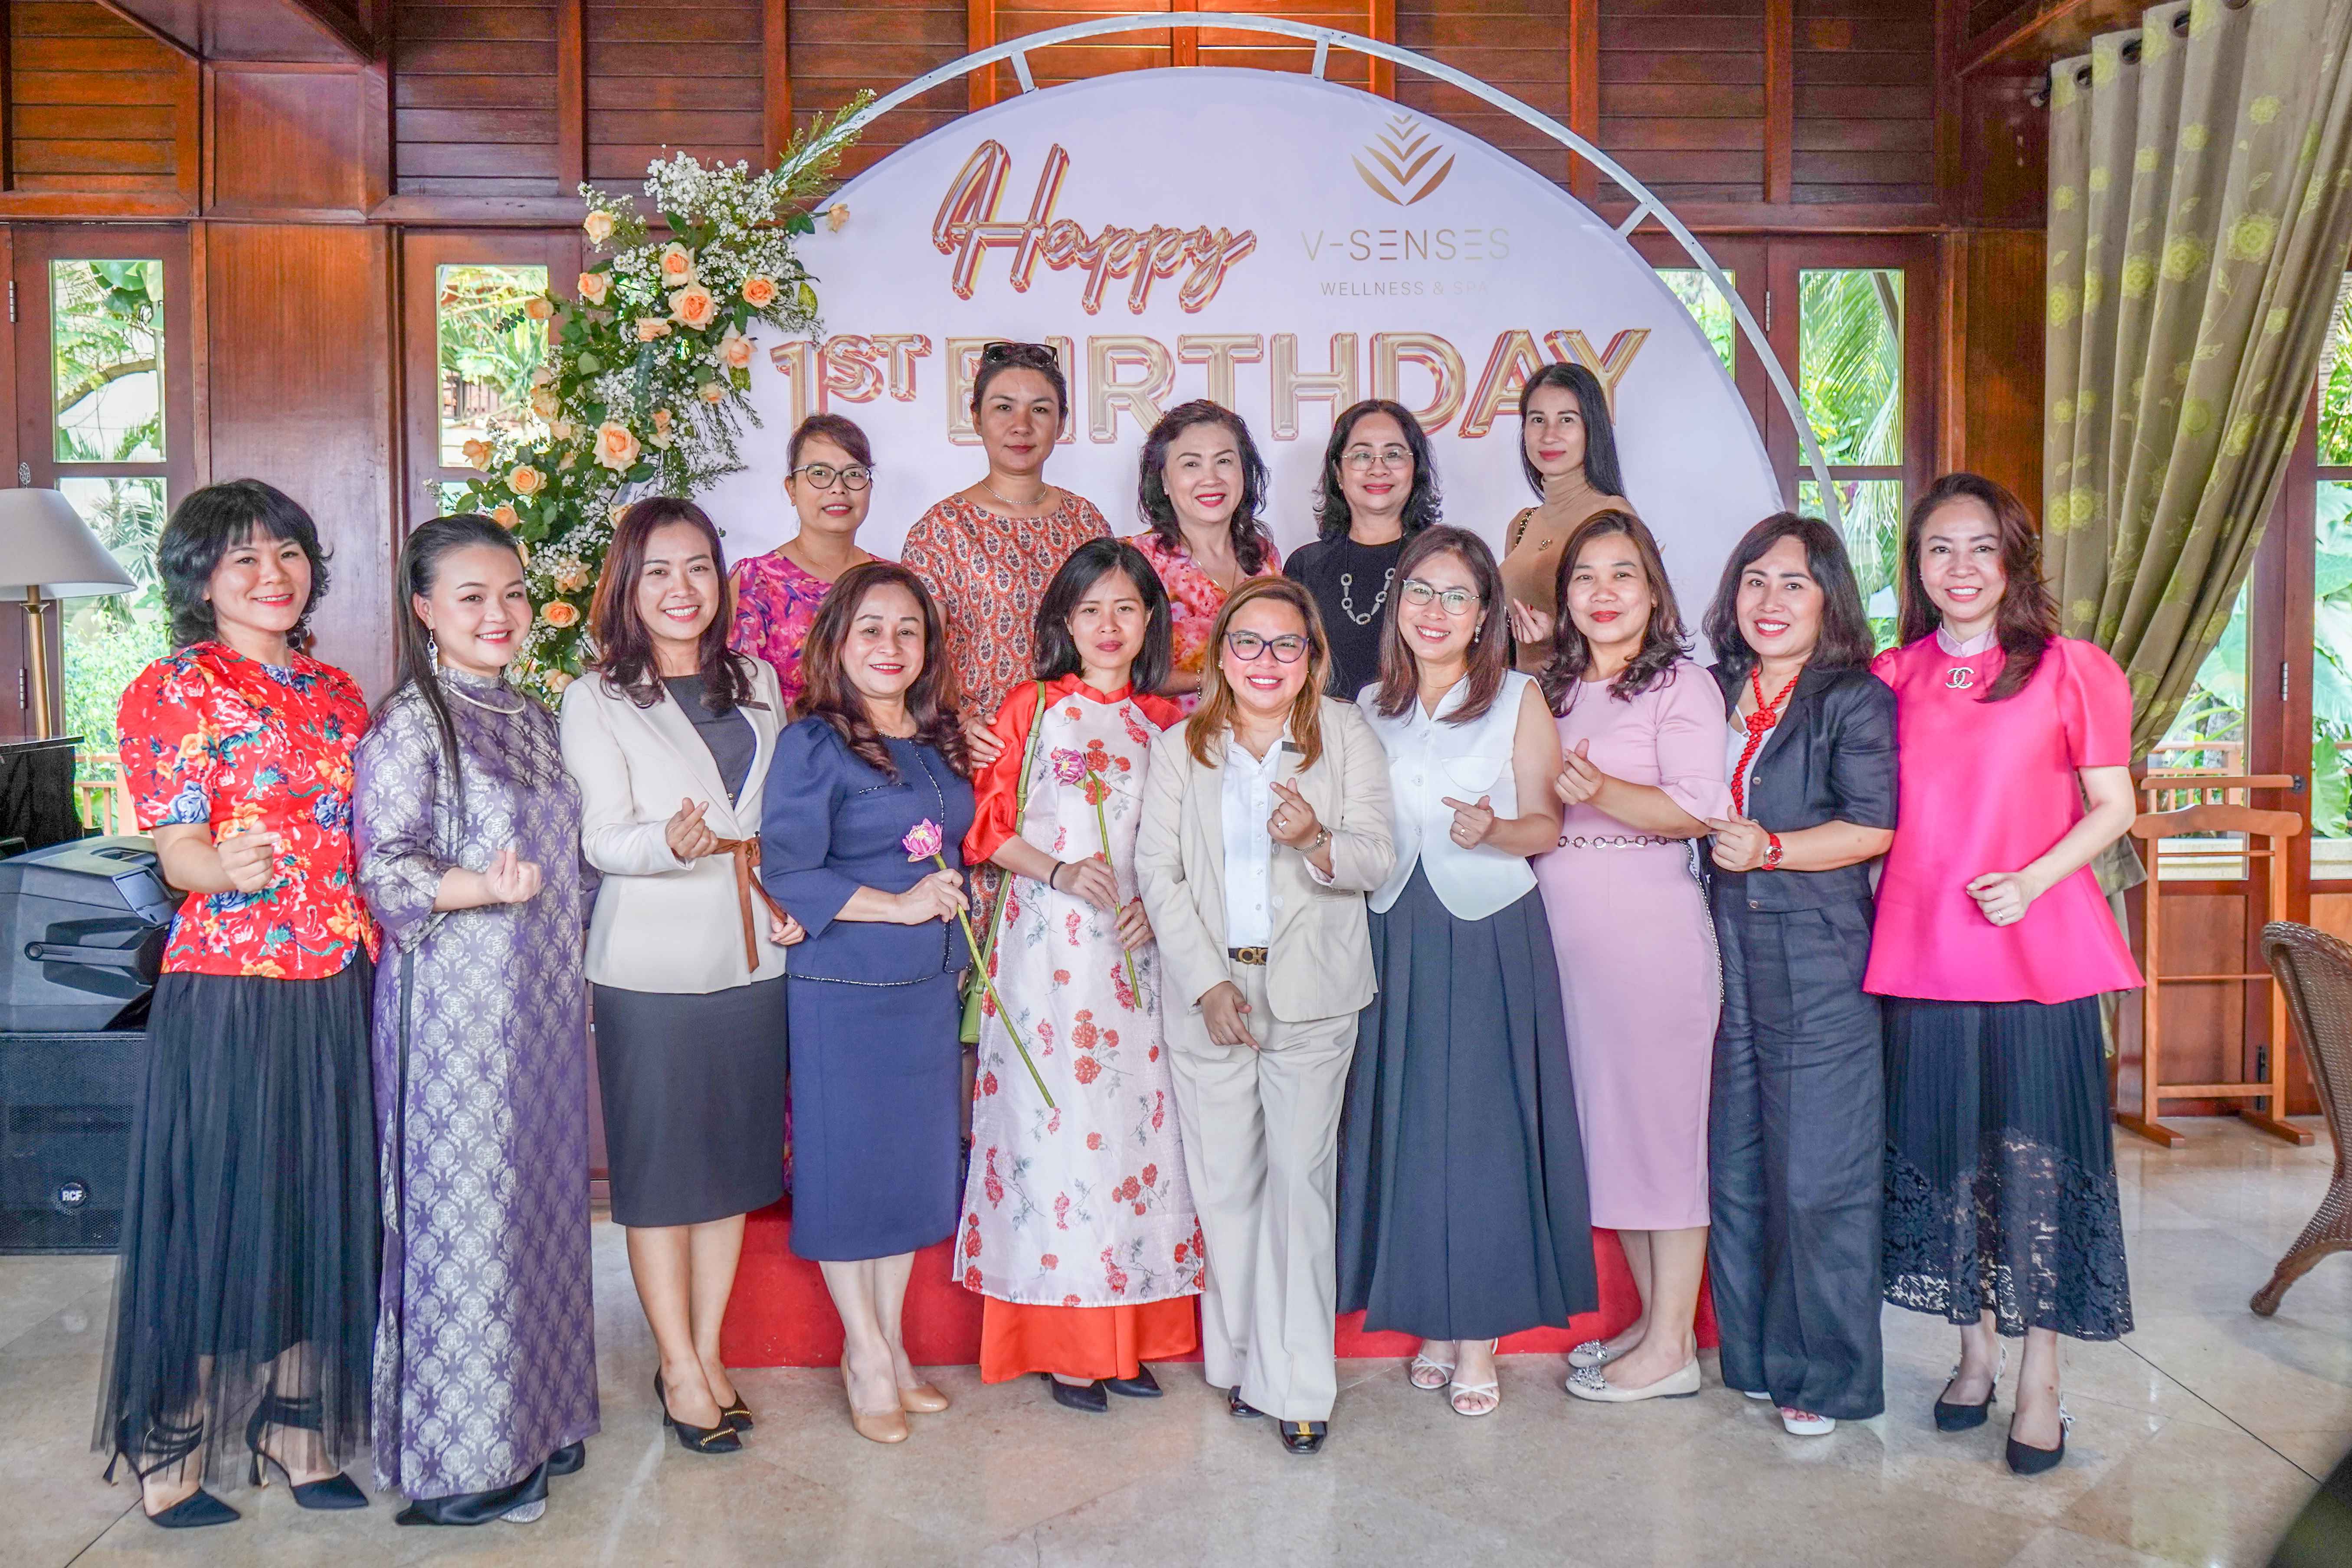 Celebrating the 1st anniversary of the establishment of V-senses Wellness & Spa – New Year Meeting Program of Da Nang City Women Business Association – DAWE